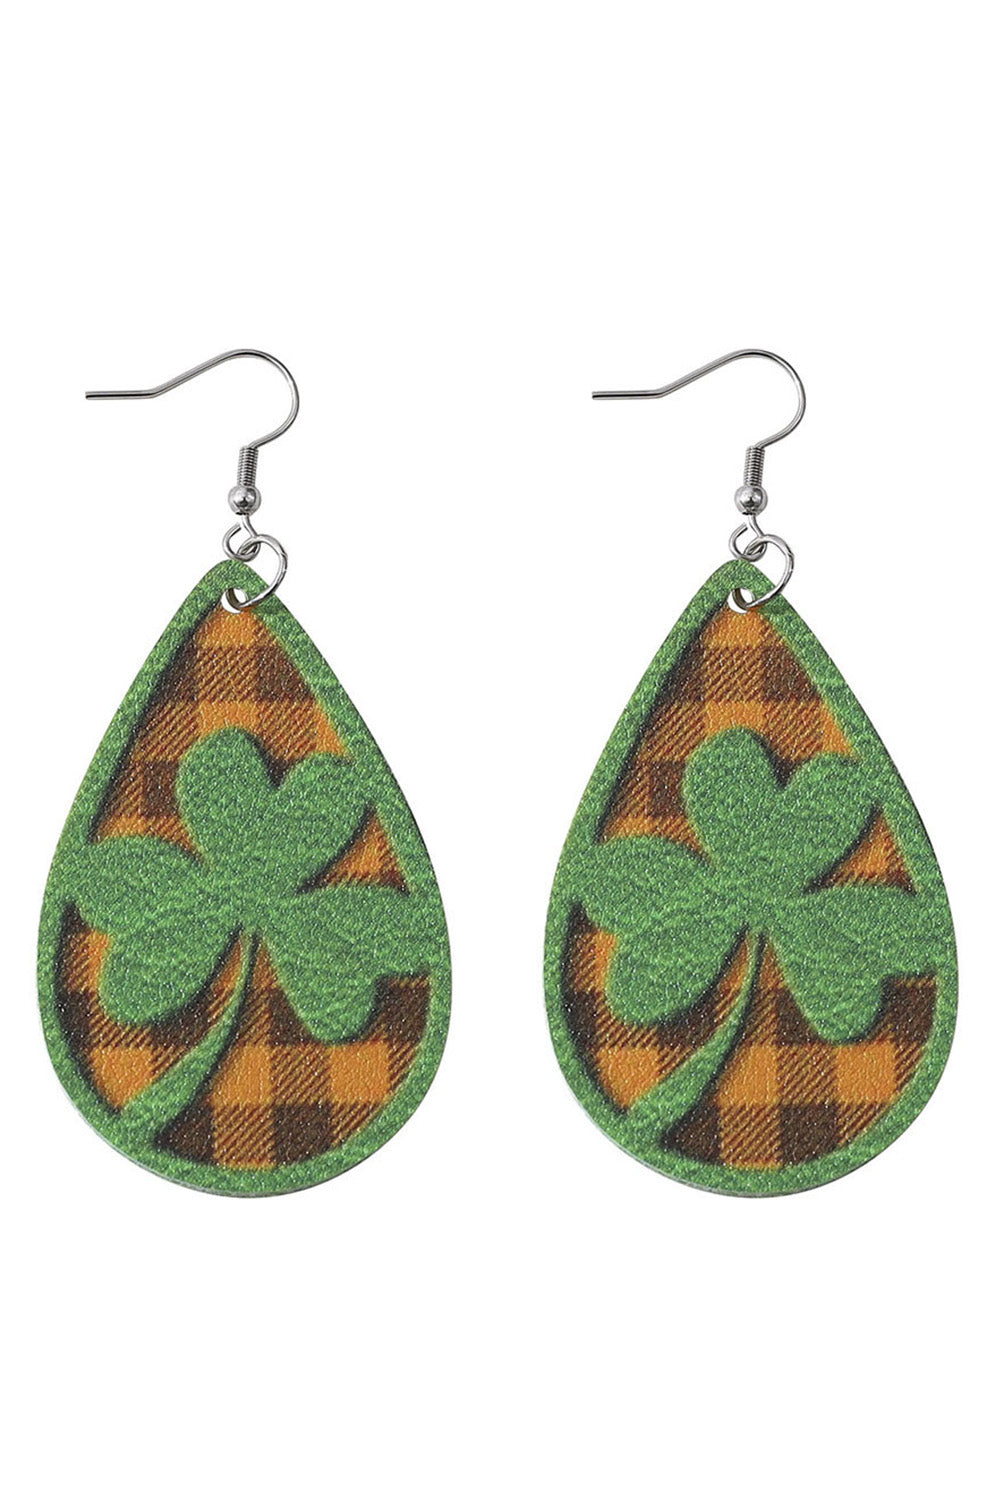 BH012378-9, Green St Patrick's Day Clover Emboss Plaid Teardrop Dangle Earrings